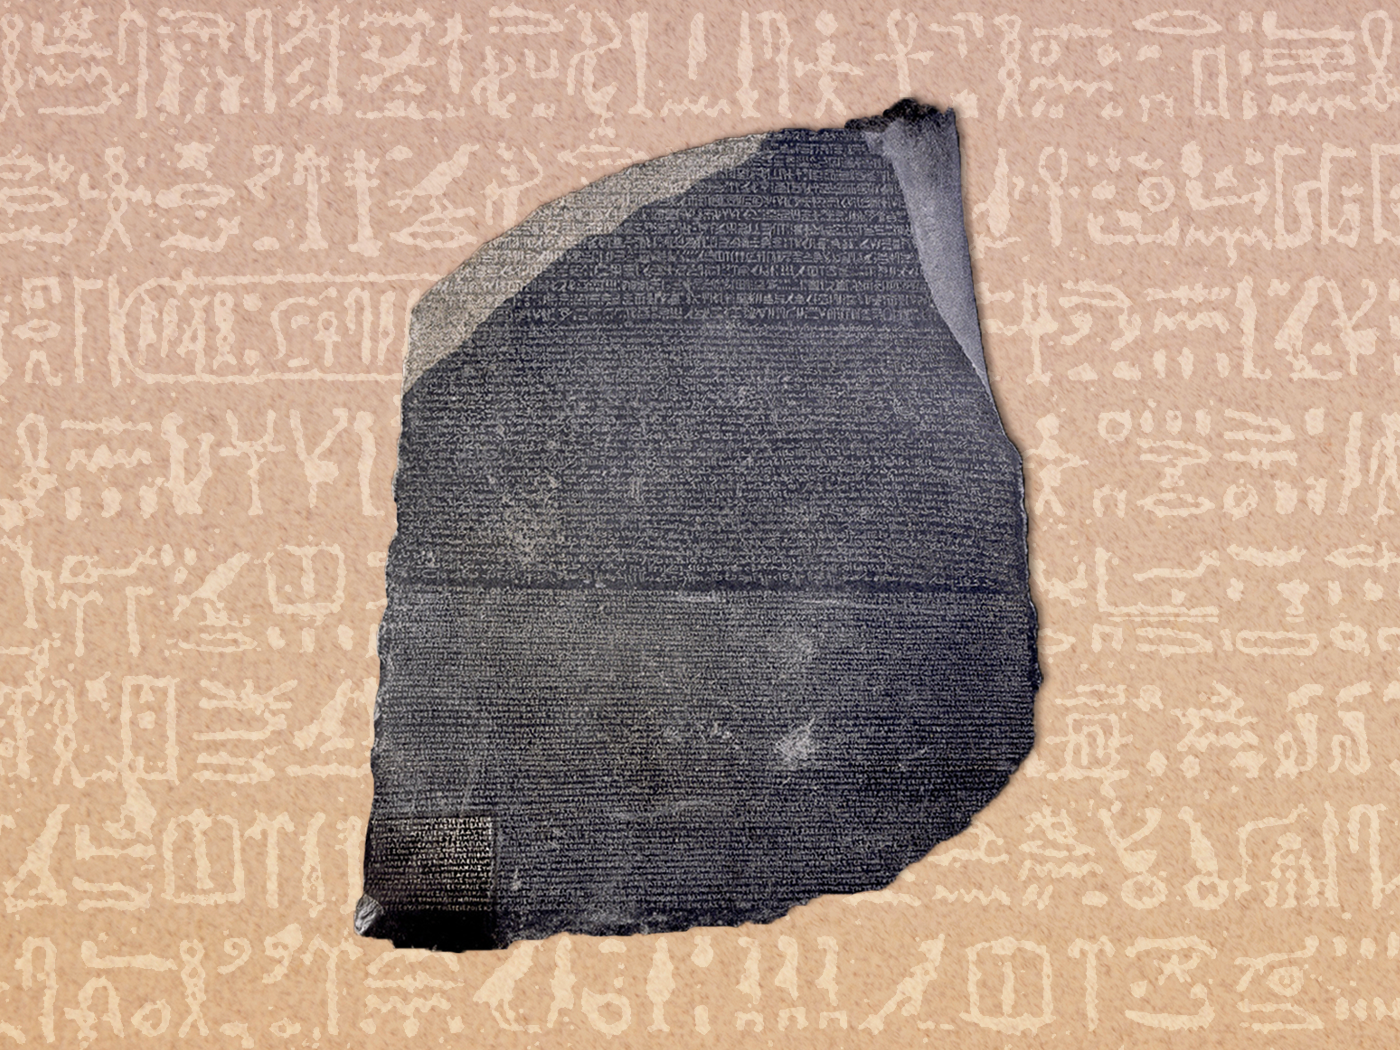 Illustration of the Rosetta Stone in front of Egyptian hieroglyphs